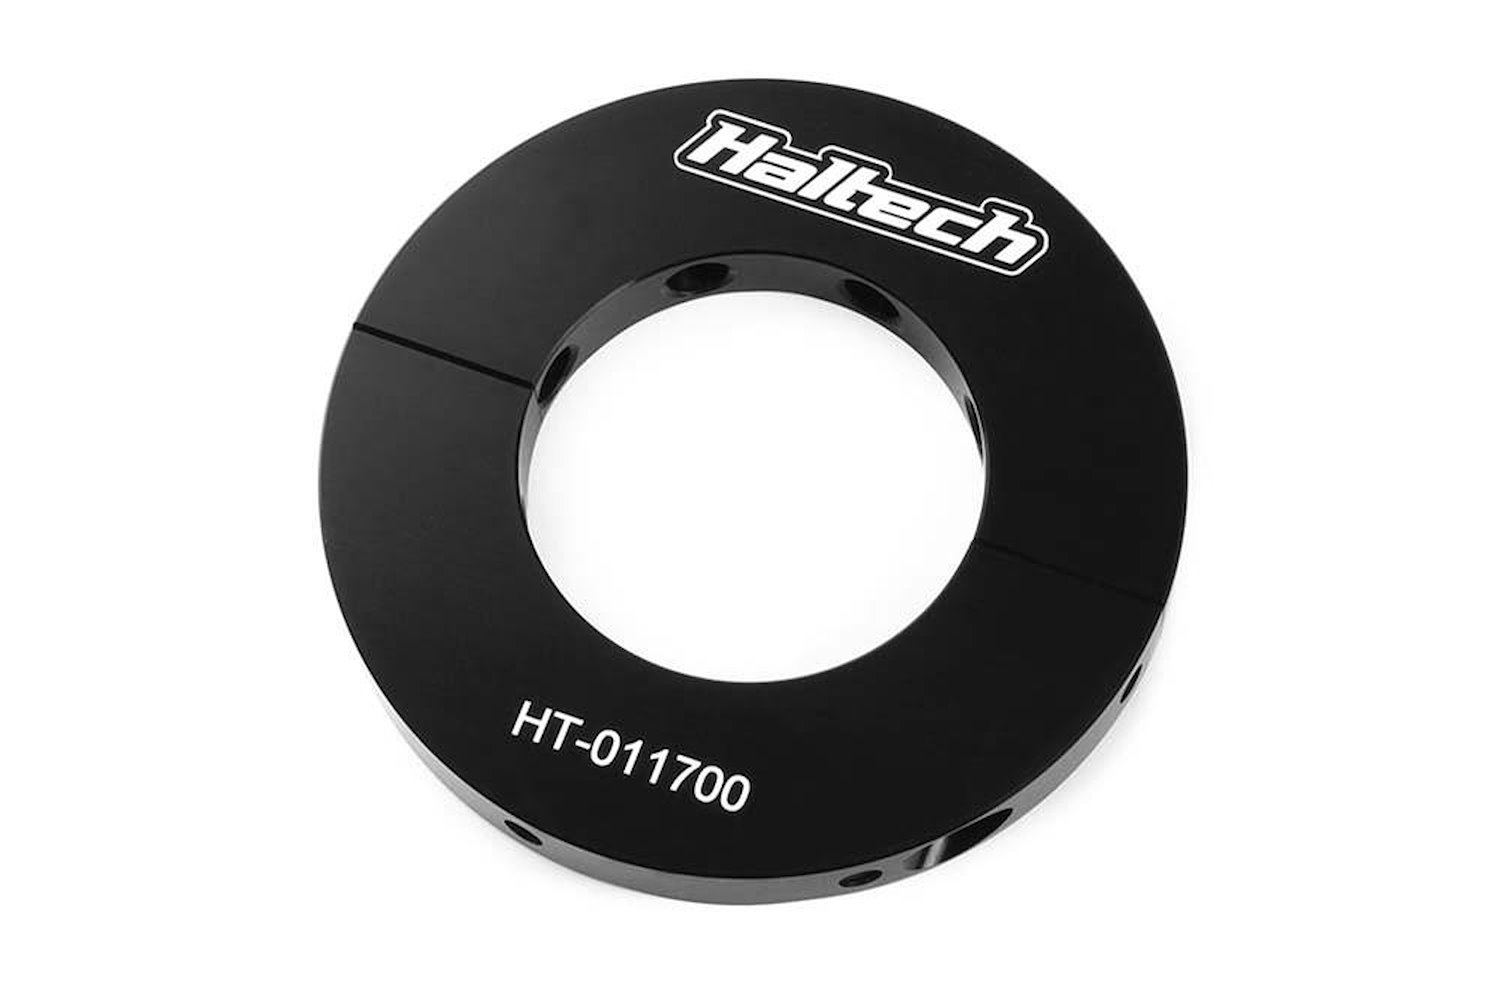 HT-011700 Driveshaft Split Collar, 1.812 in. / 46 mm I.D., 8 Magnet